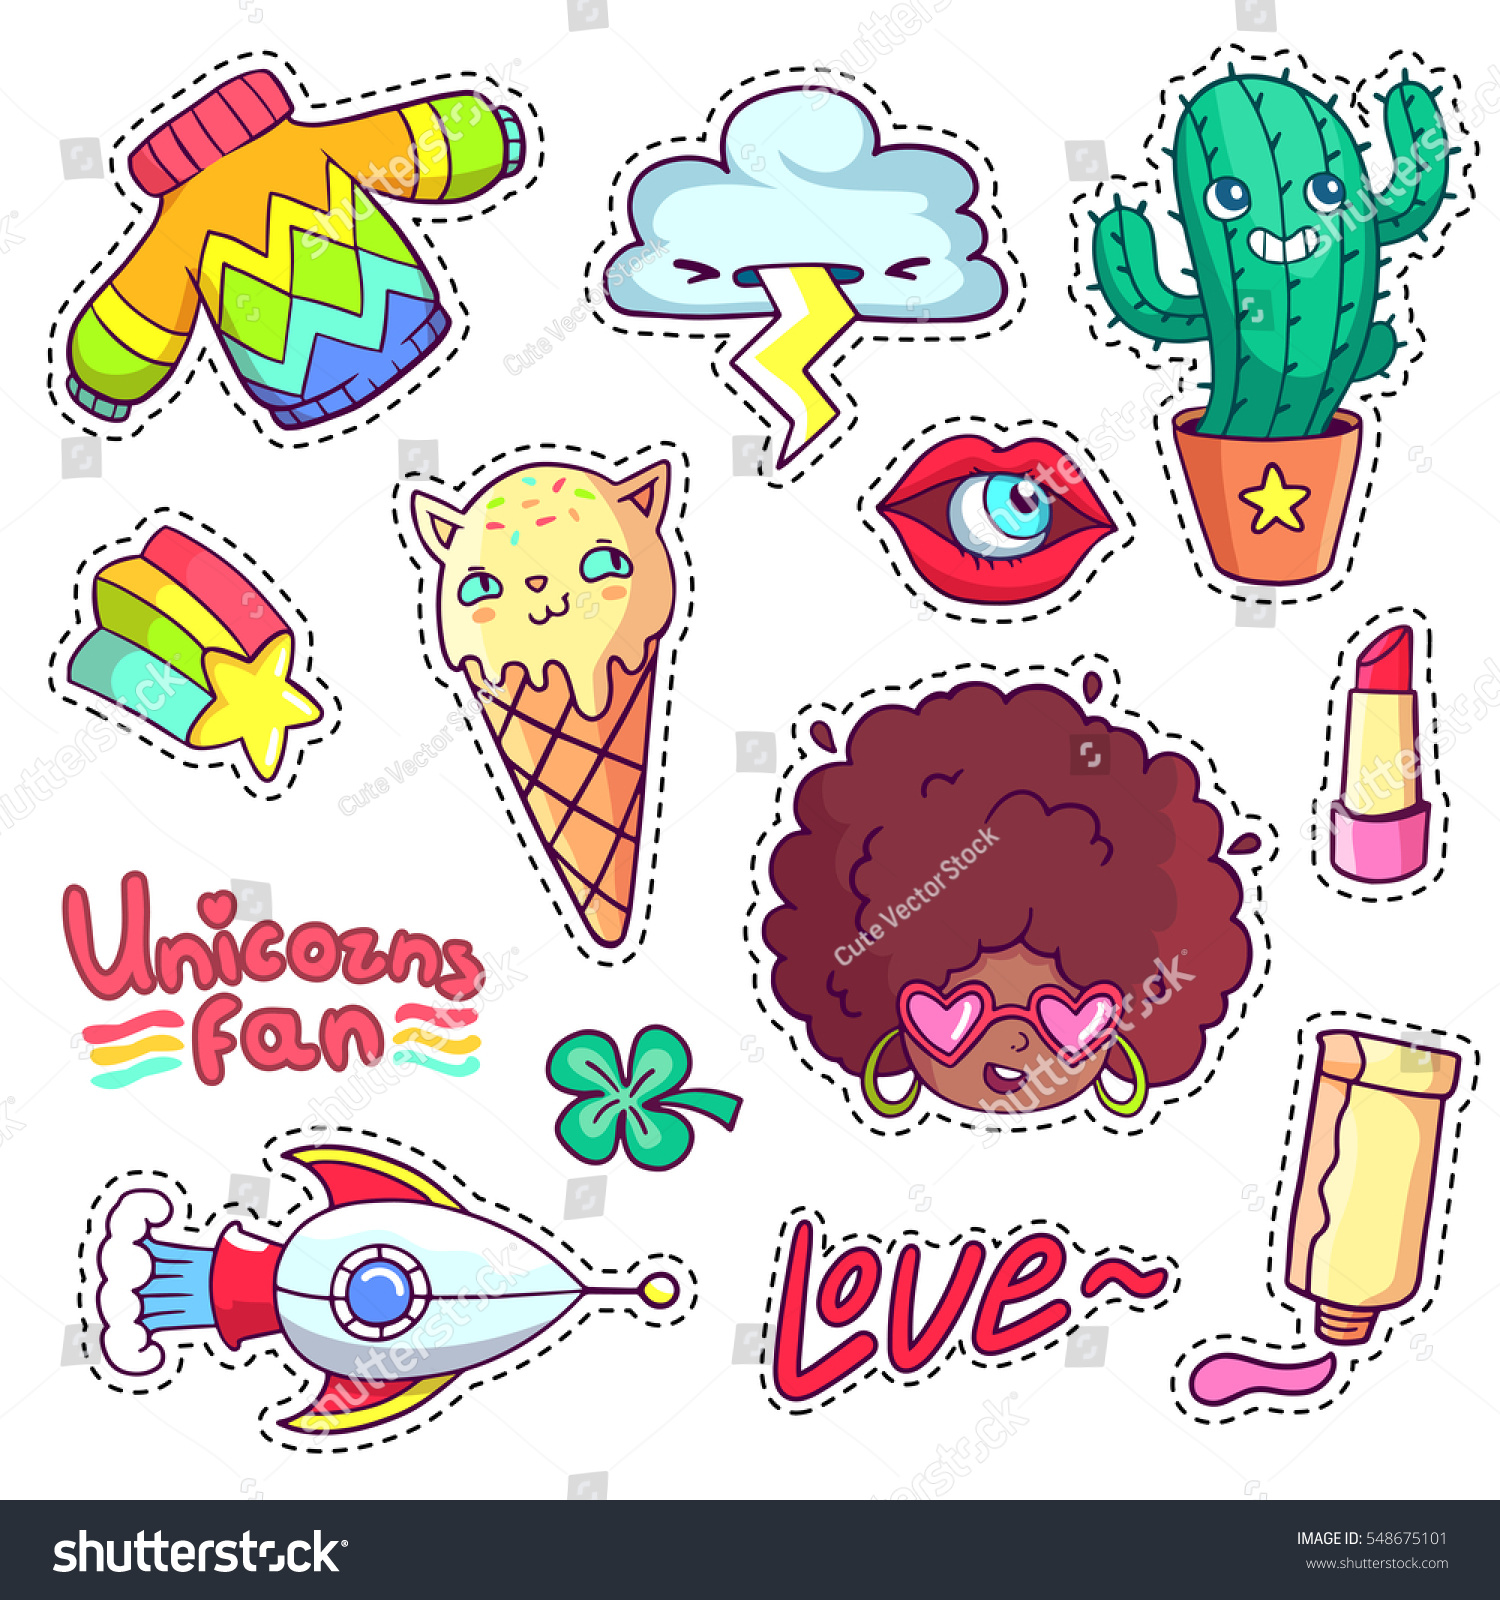 Unique stickers